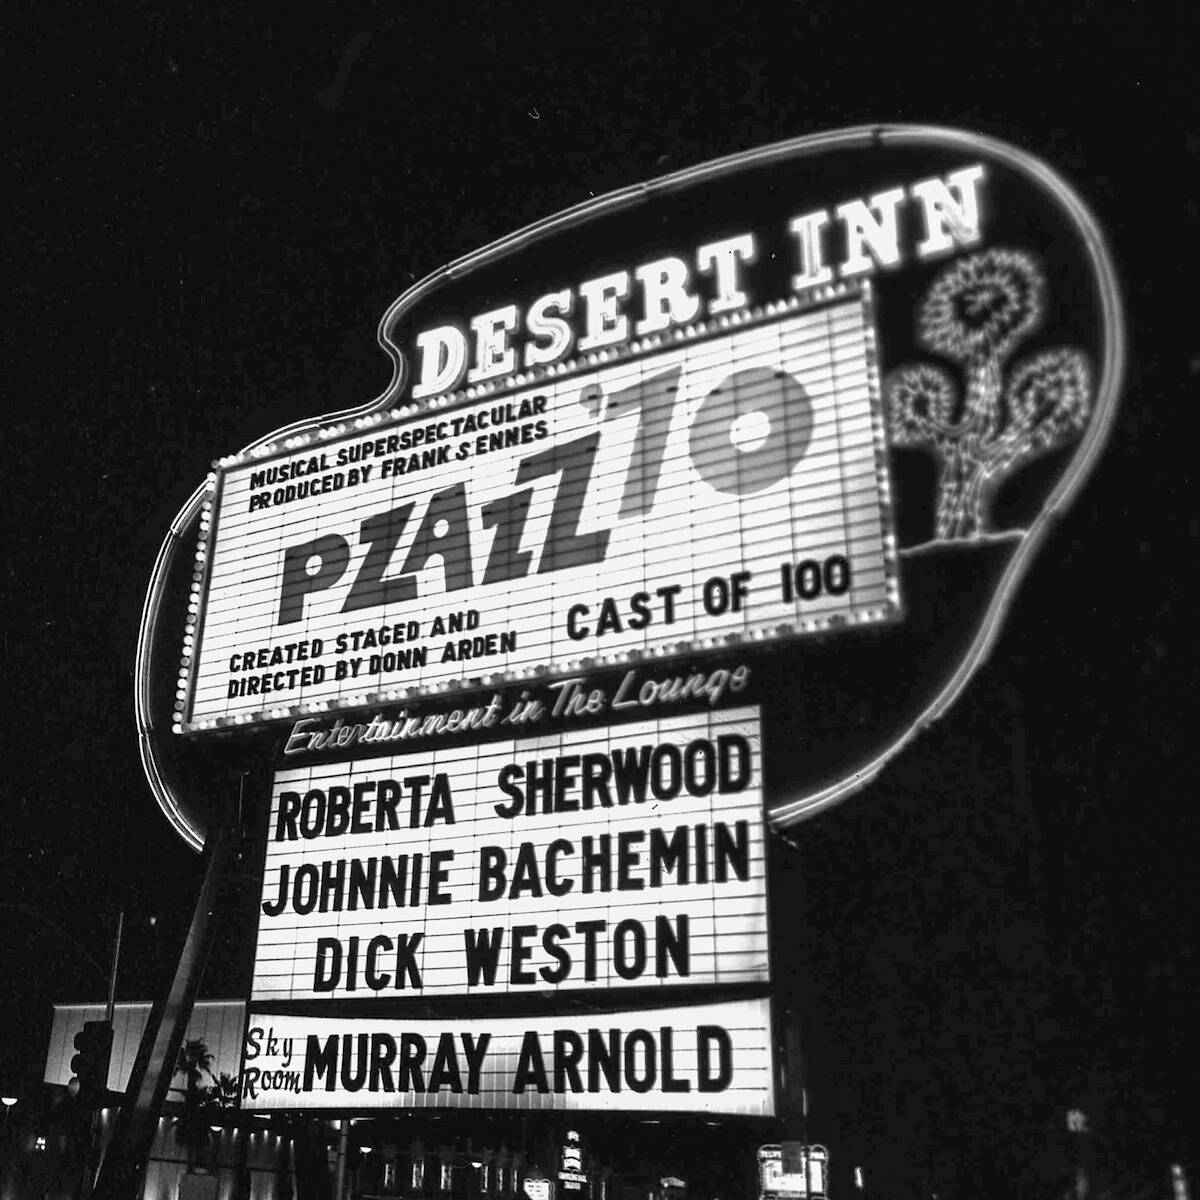 The Desert Inn marquee with Pzazz '70 on Nov. 24, 1969. (Las Vegas News Bureau)